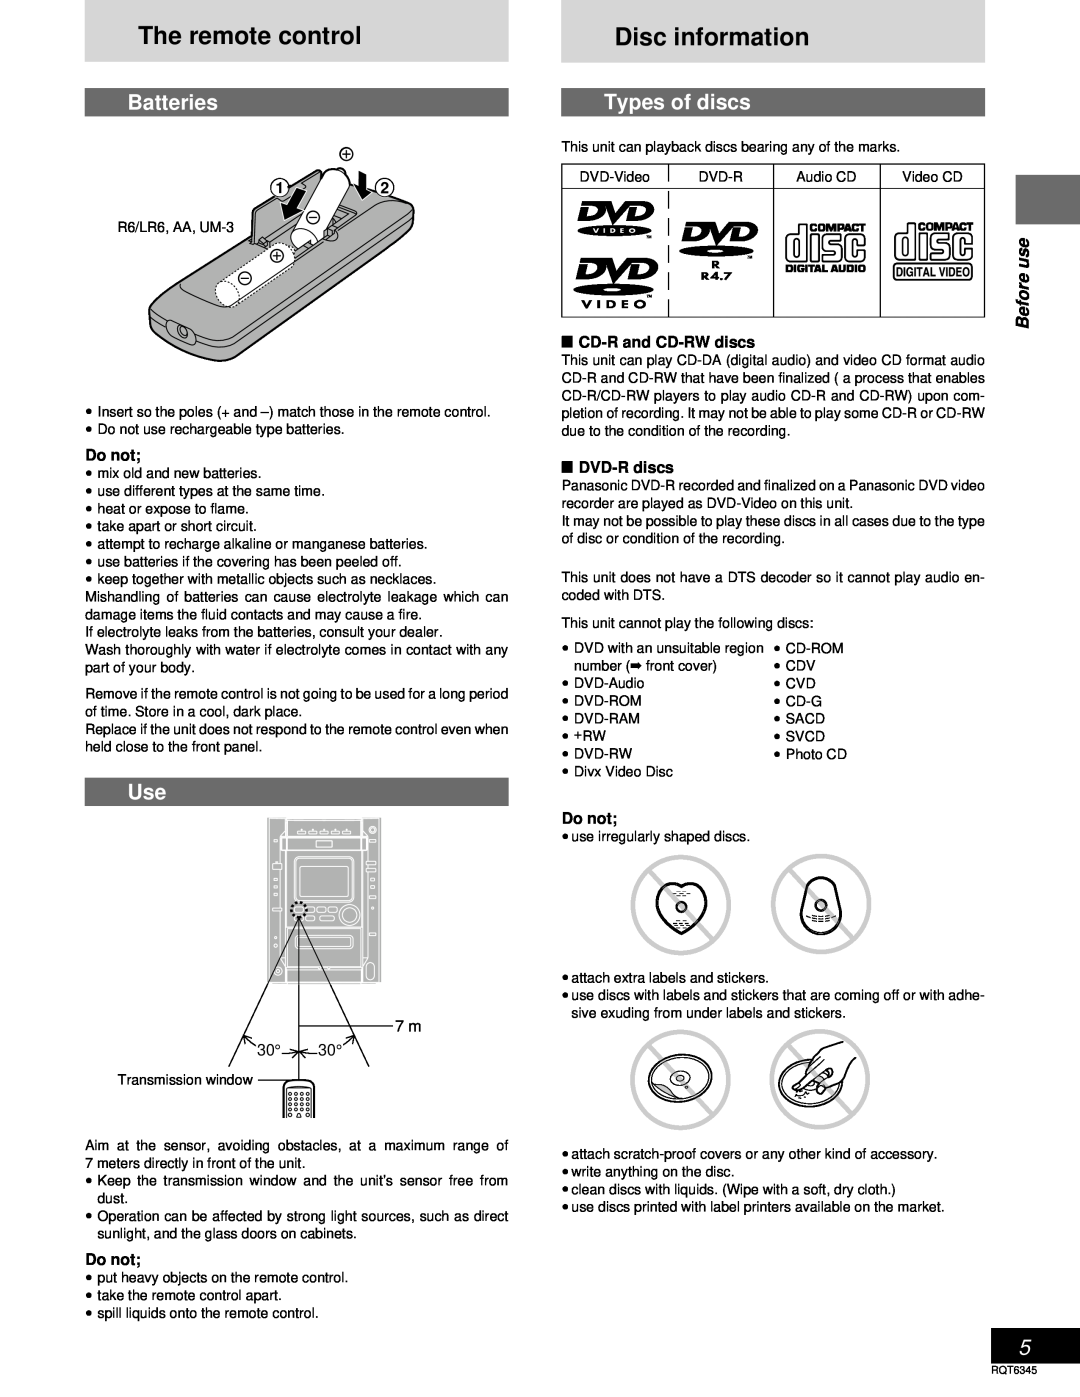 Panasonic SC-DK20 The remote control, Disc information, Batteries, Types of discs, +Rw, Do not, 7 m, L CD-Rand CD-RWdiscs 